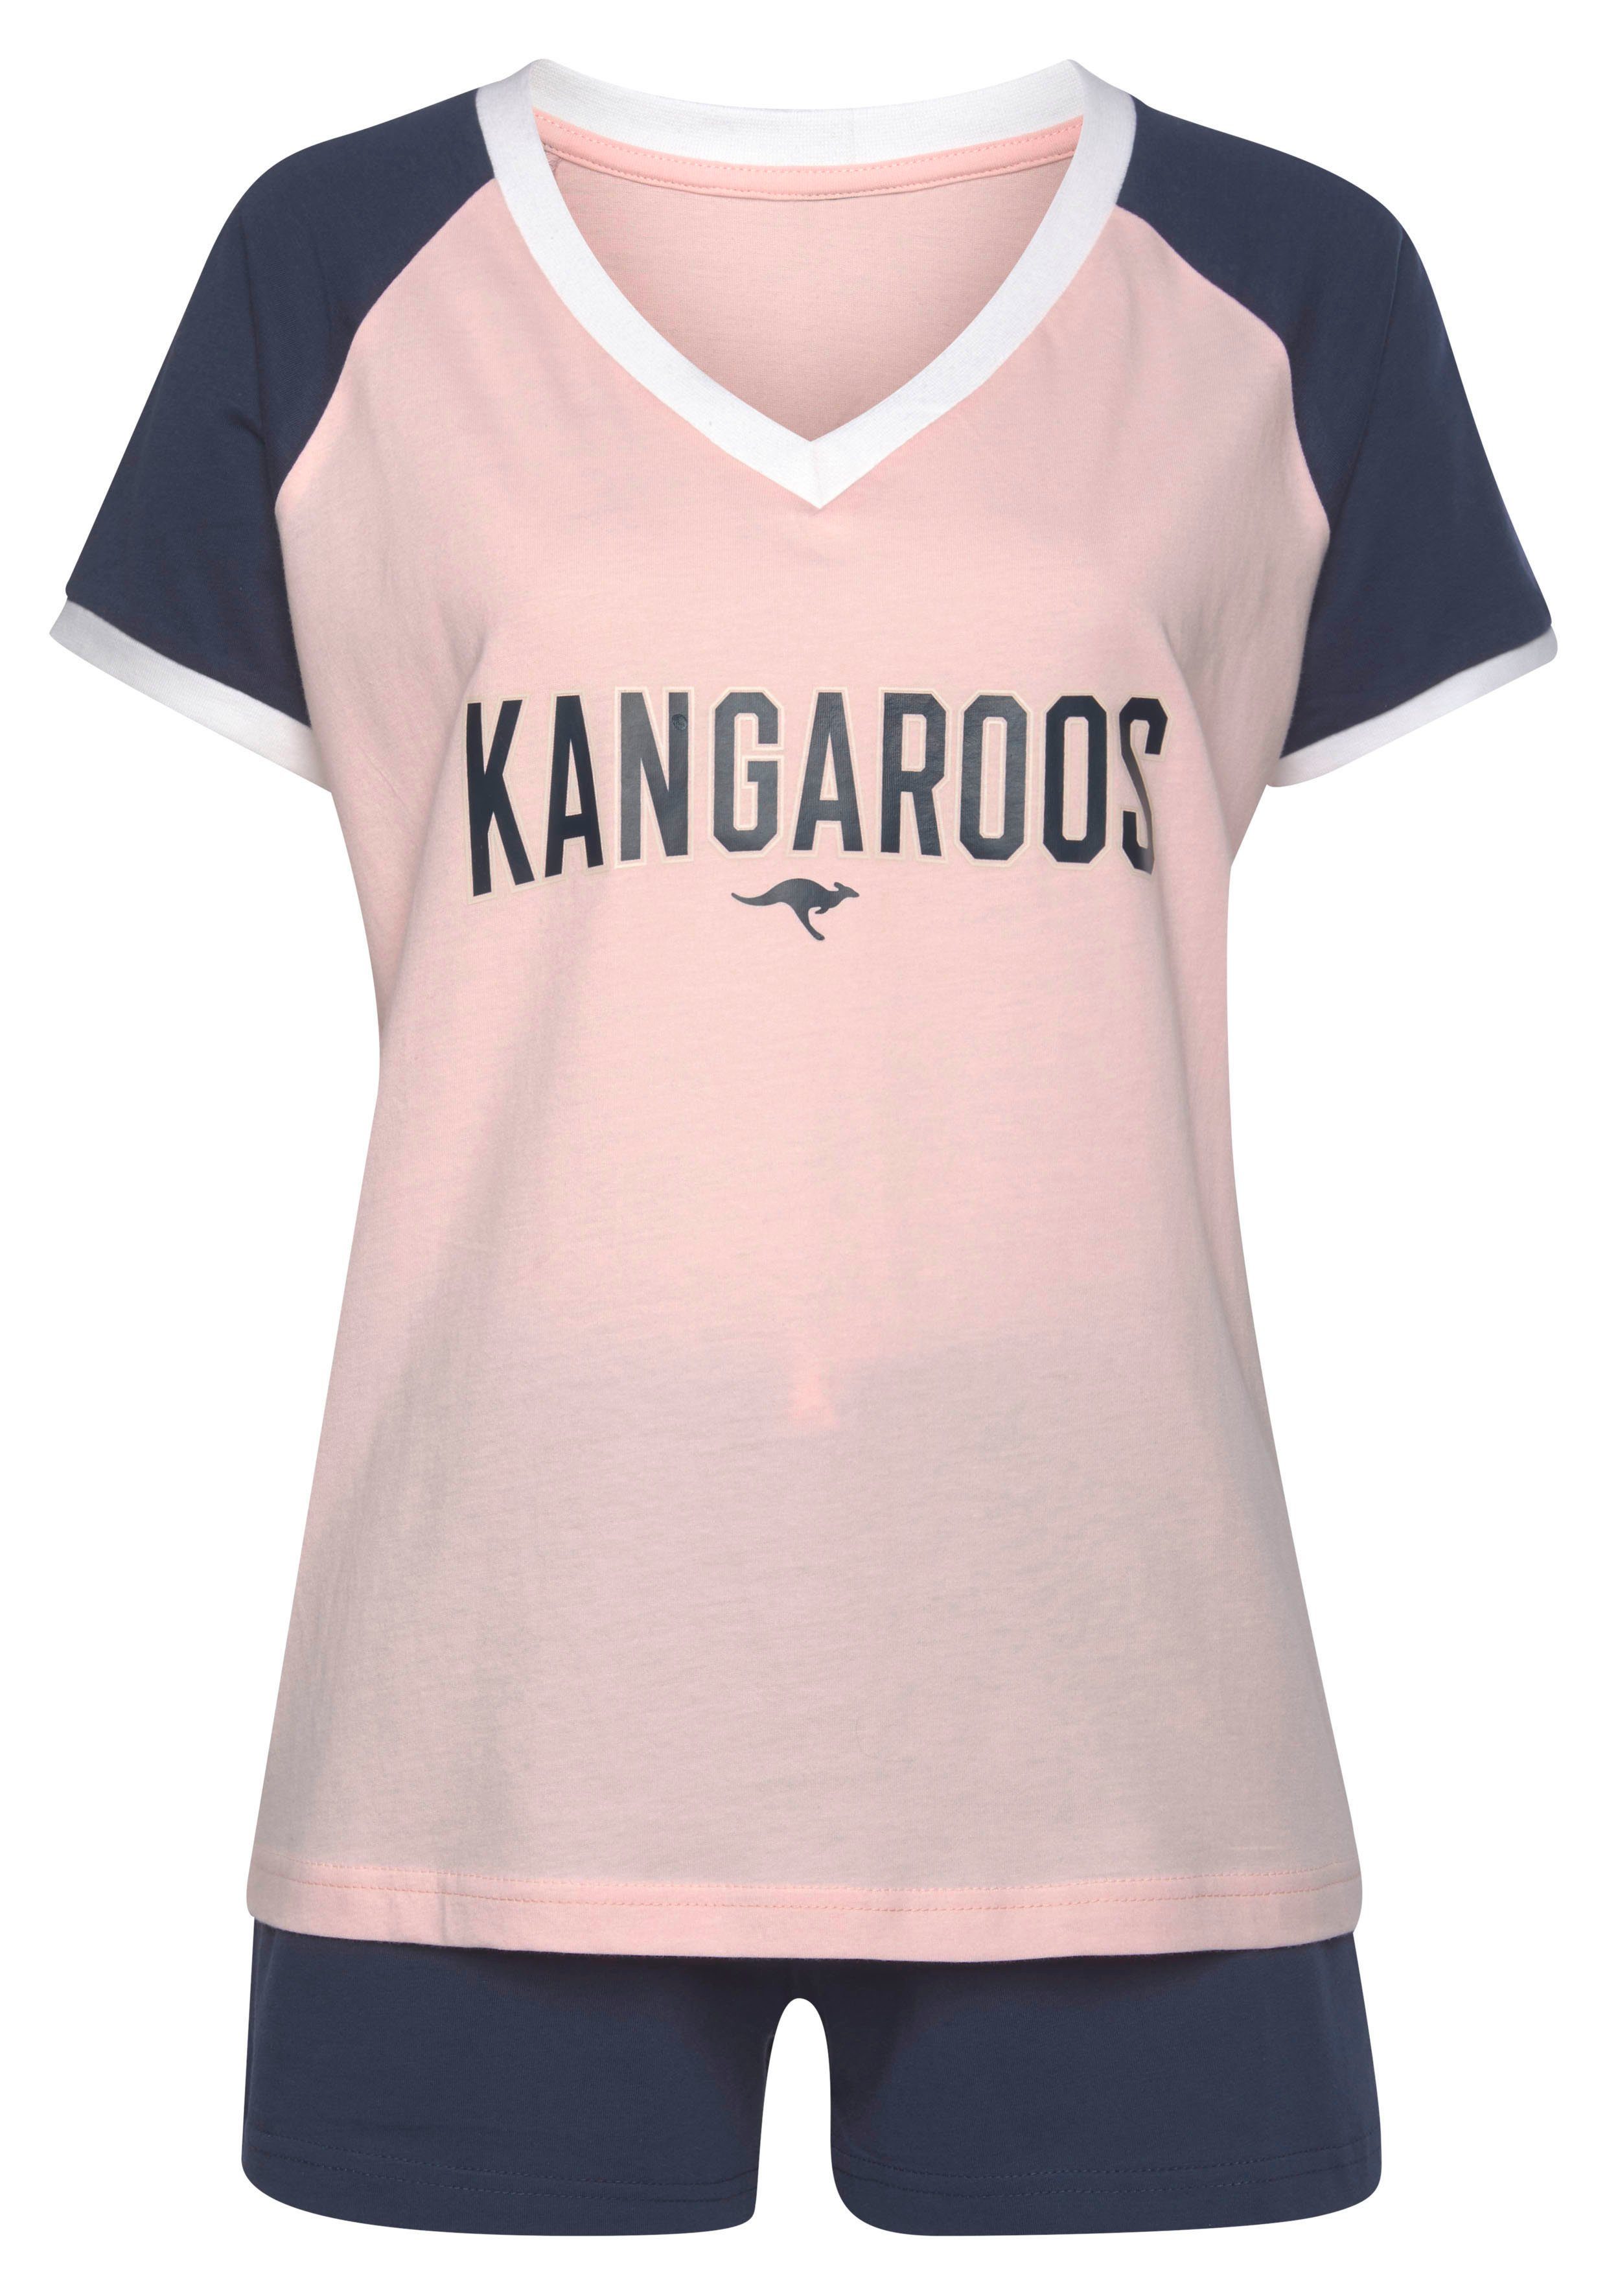 KangaROOS Shorty kontrastfarbenen rosa-dunkelblau Stück) mit tlg., Raglanärmeln 1 (2